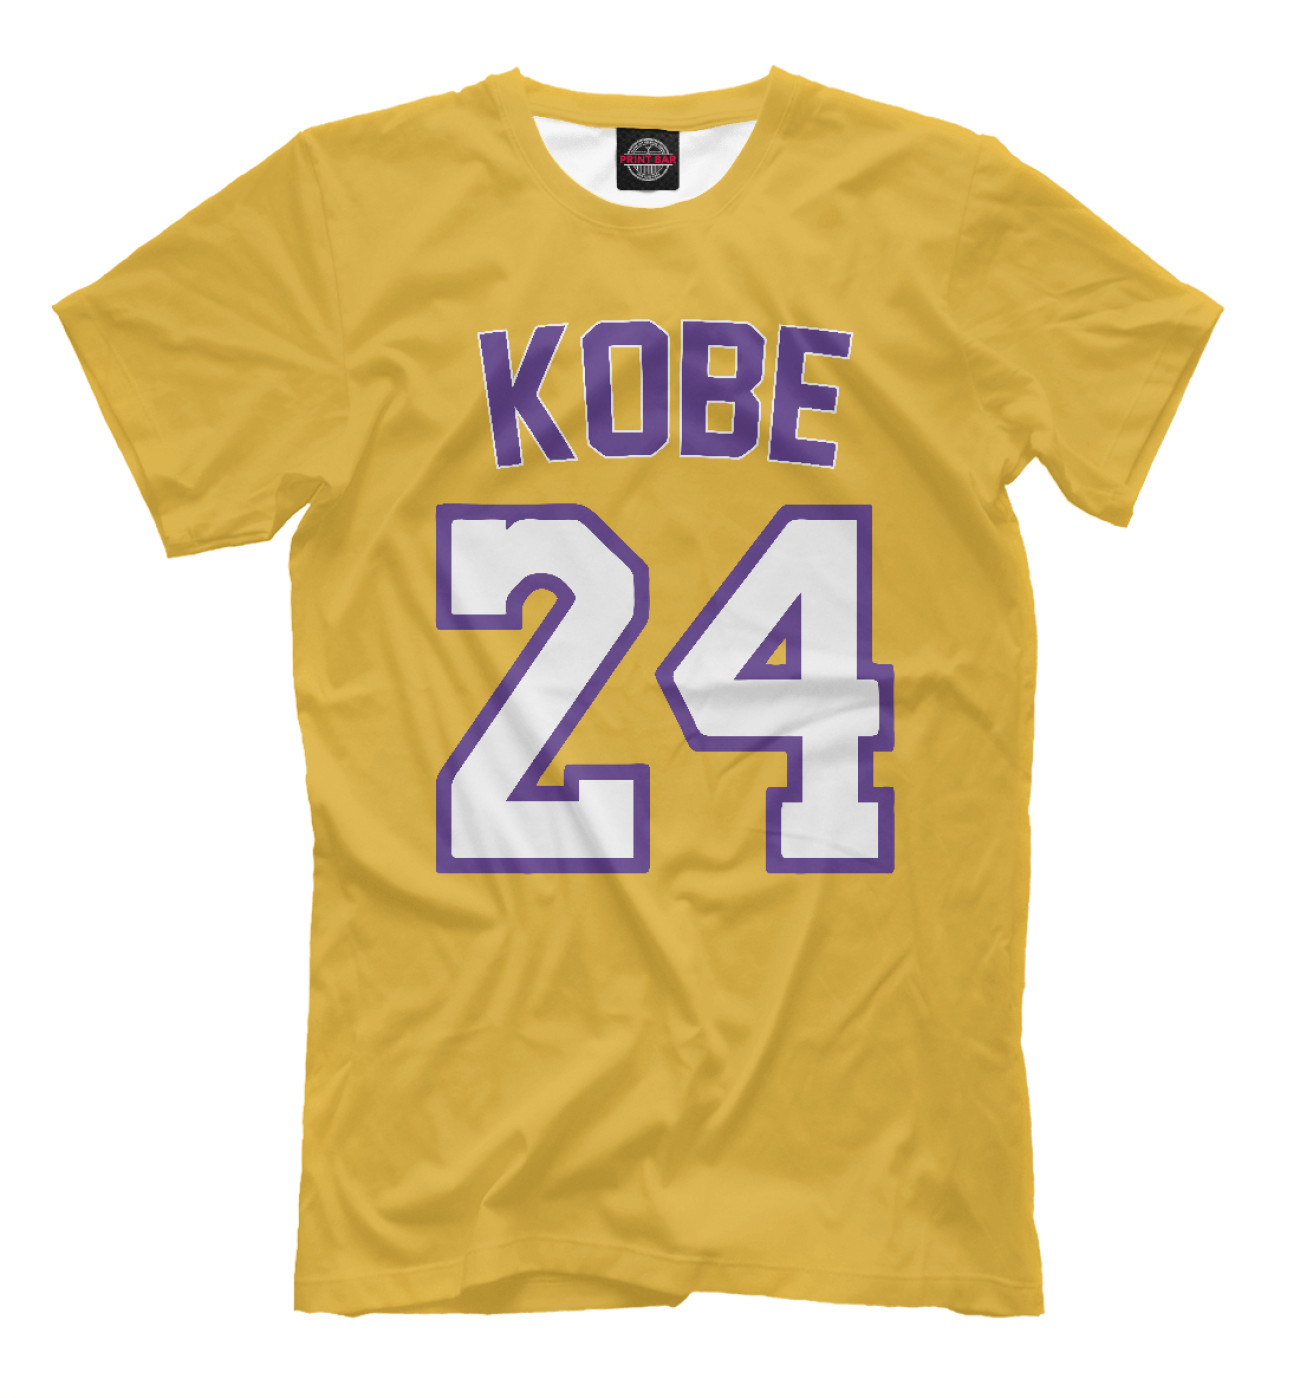 Мужская Футболка Kobe 24, артикул: NBA-974300-fut-2